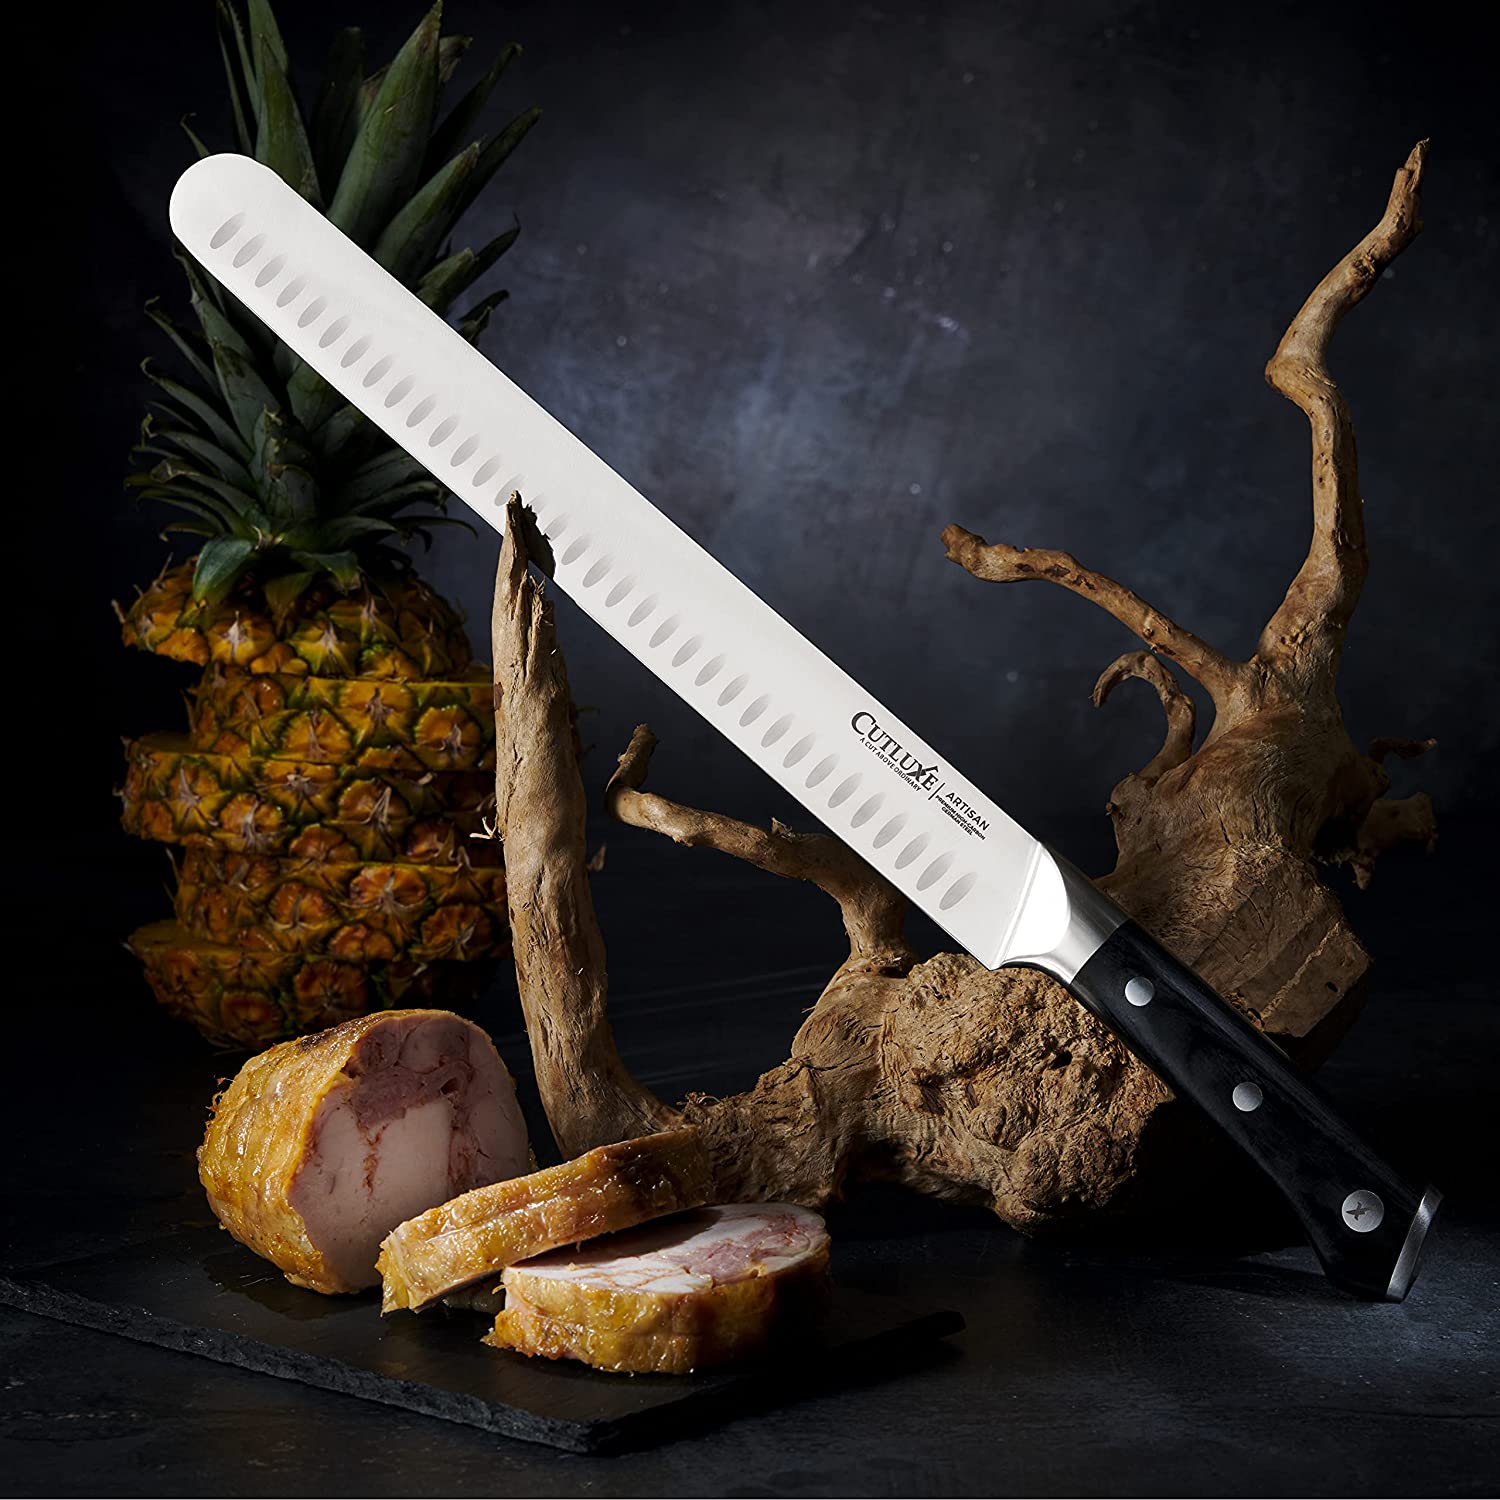 12″ Slicing Carving Knife | Artisan Series